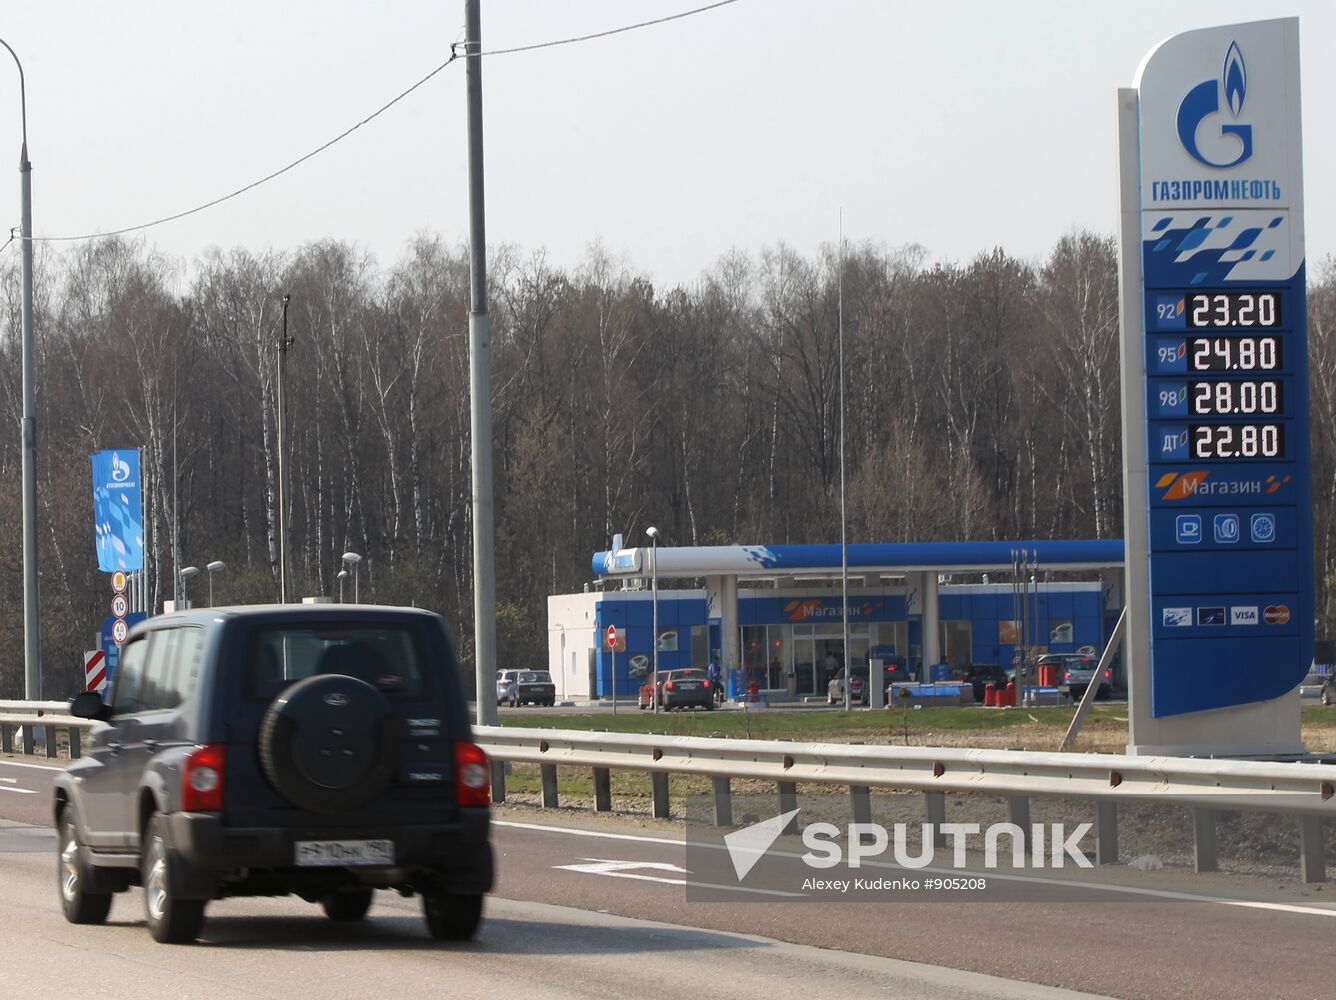 Gazpromneft gas station operation